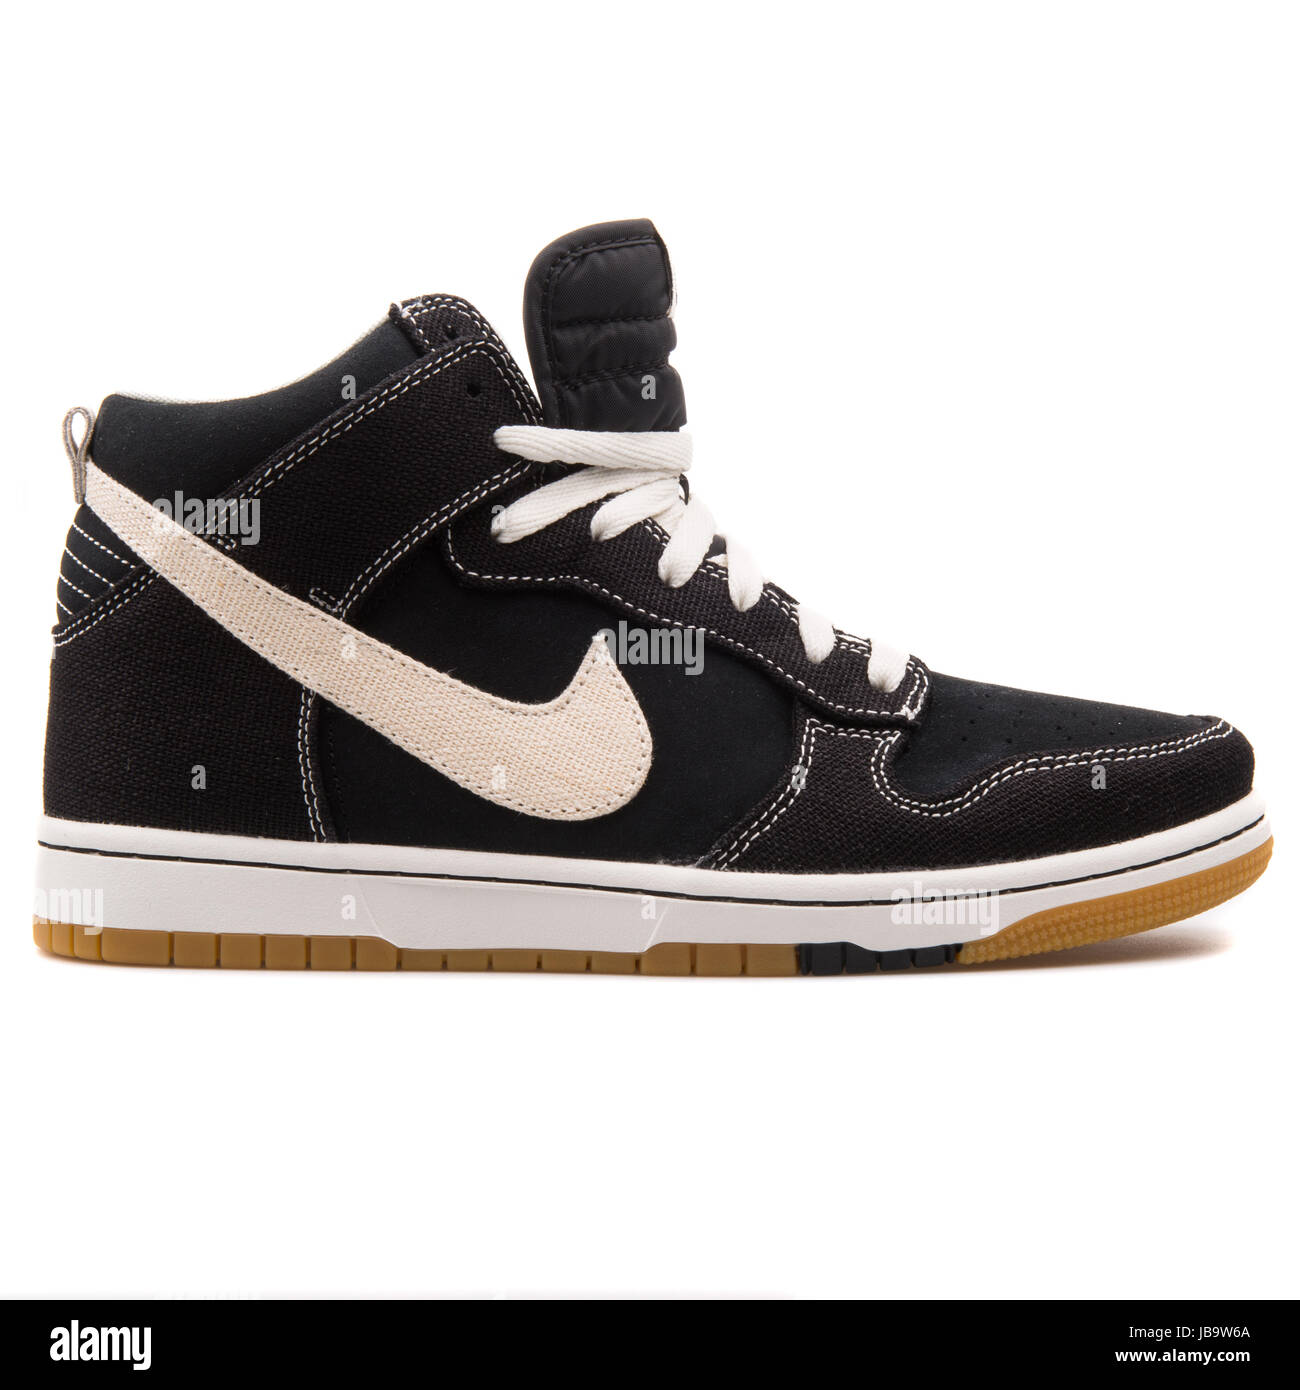 Nike Dunk CMFT Black Men's Basketball Retro Shoes - 705434-002 Stock Photo  - Alamy